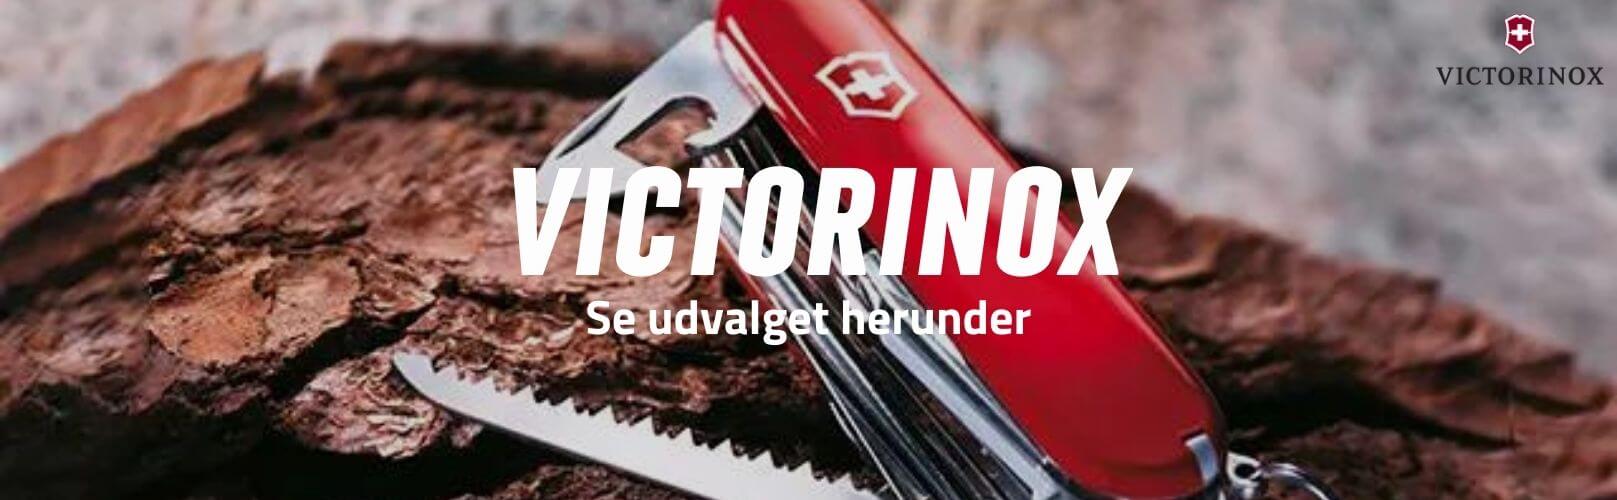 Victorinox brand banner